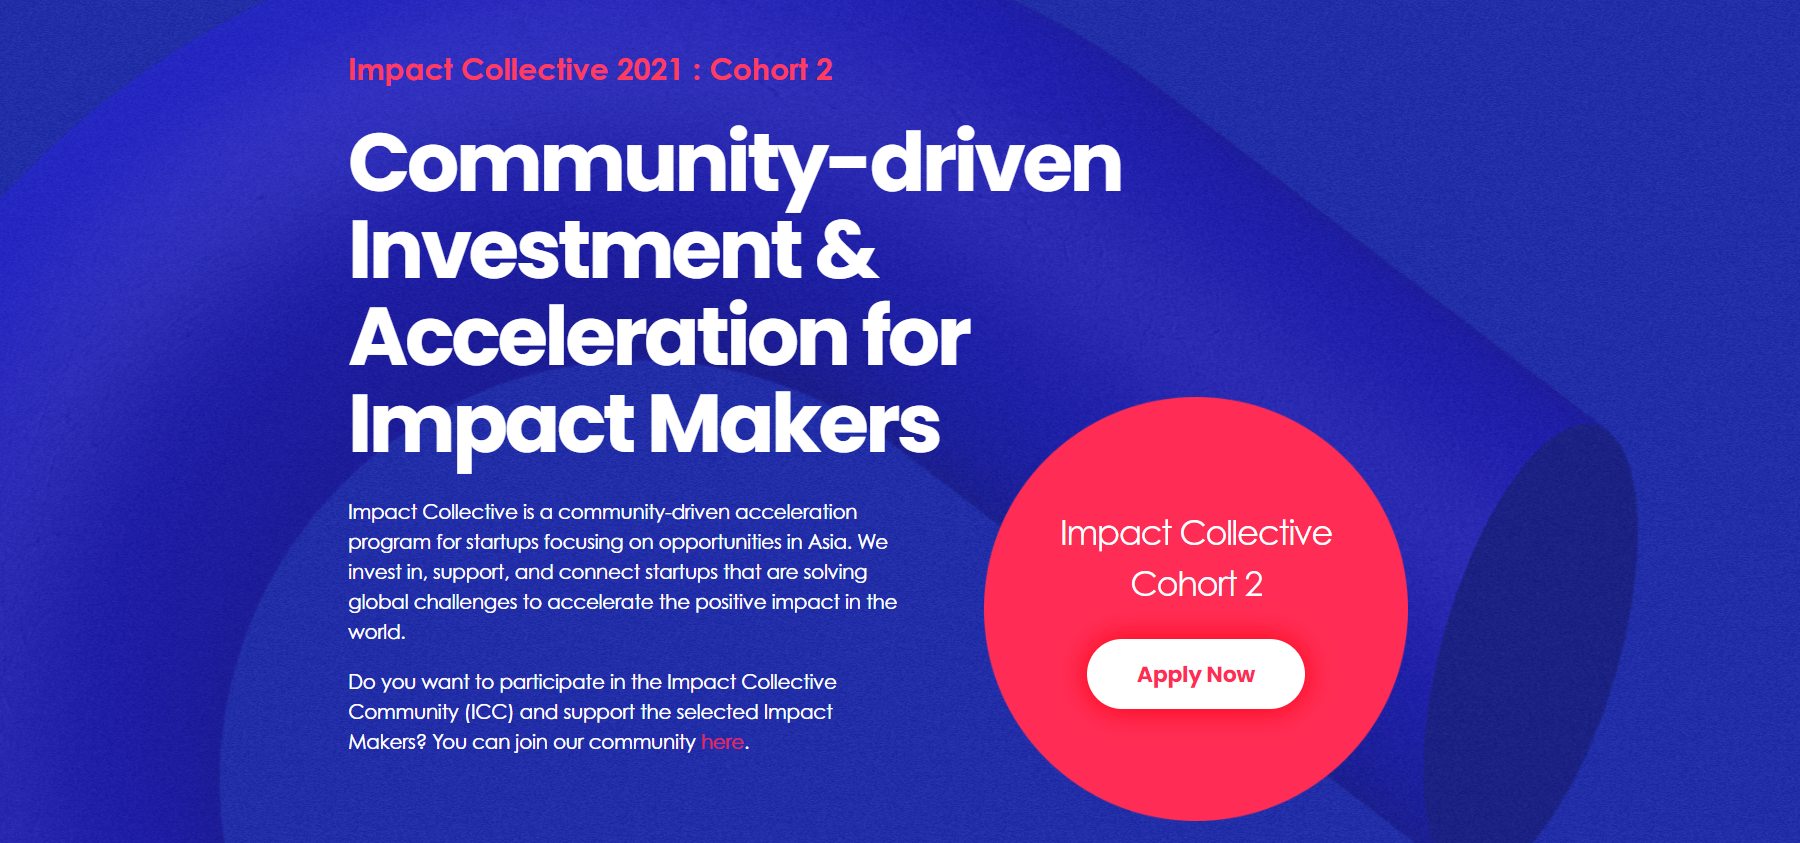 Impact Collective Cohort 2